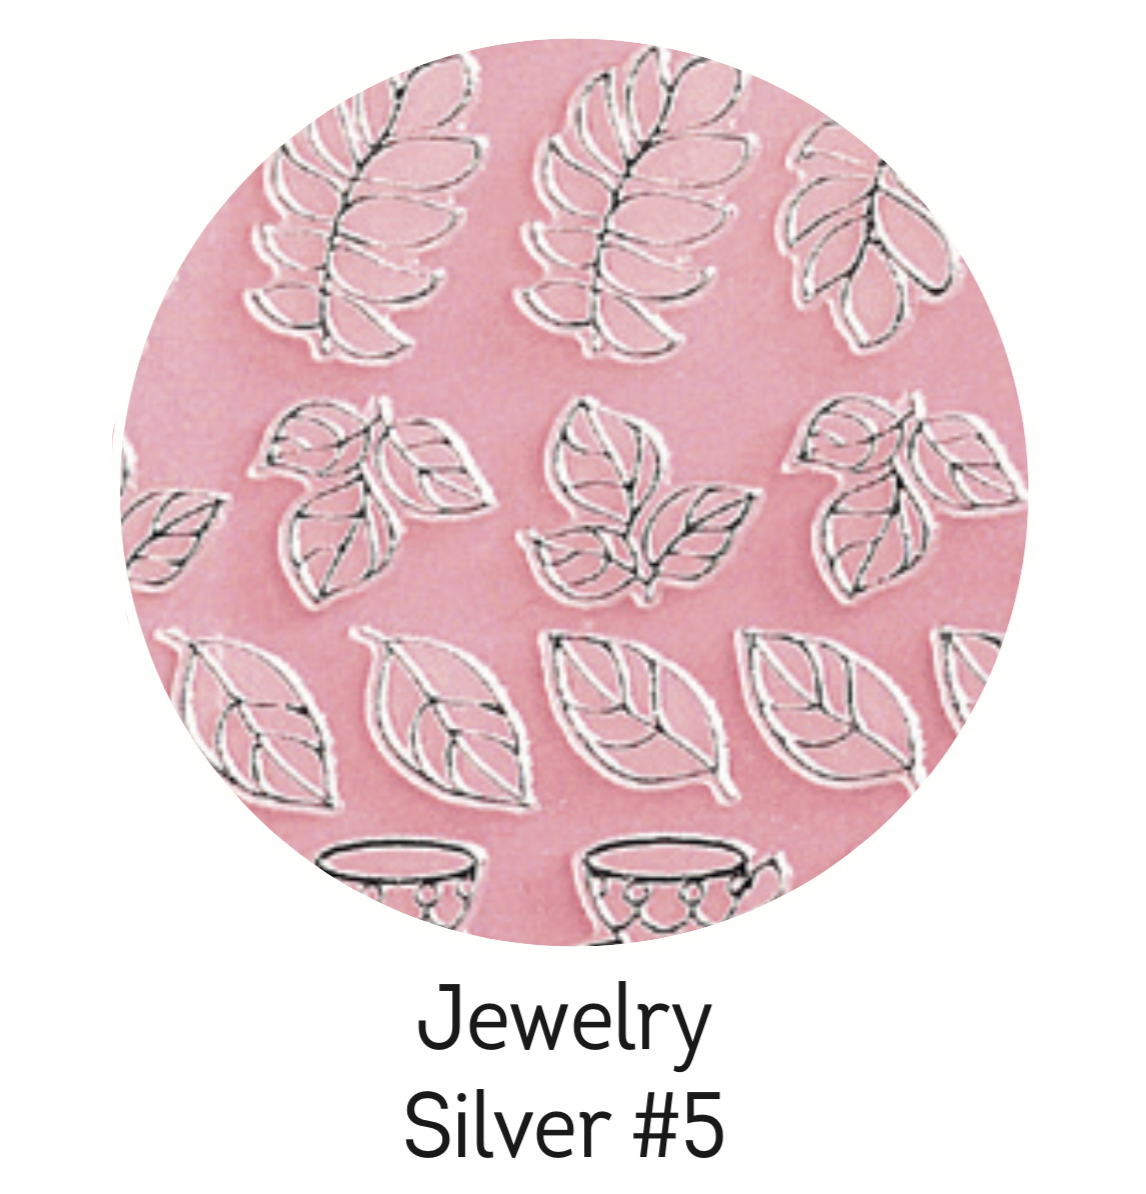 Charmicon Silicone Stickers Jewelry Silver #5